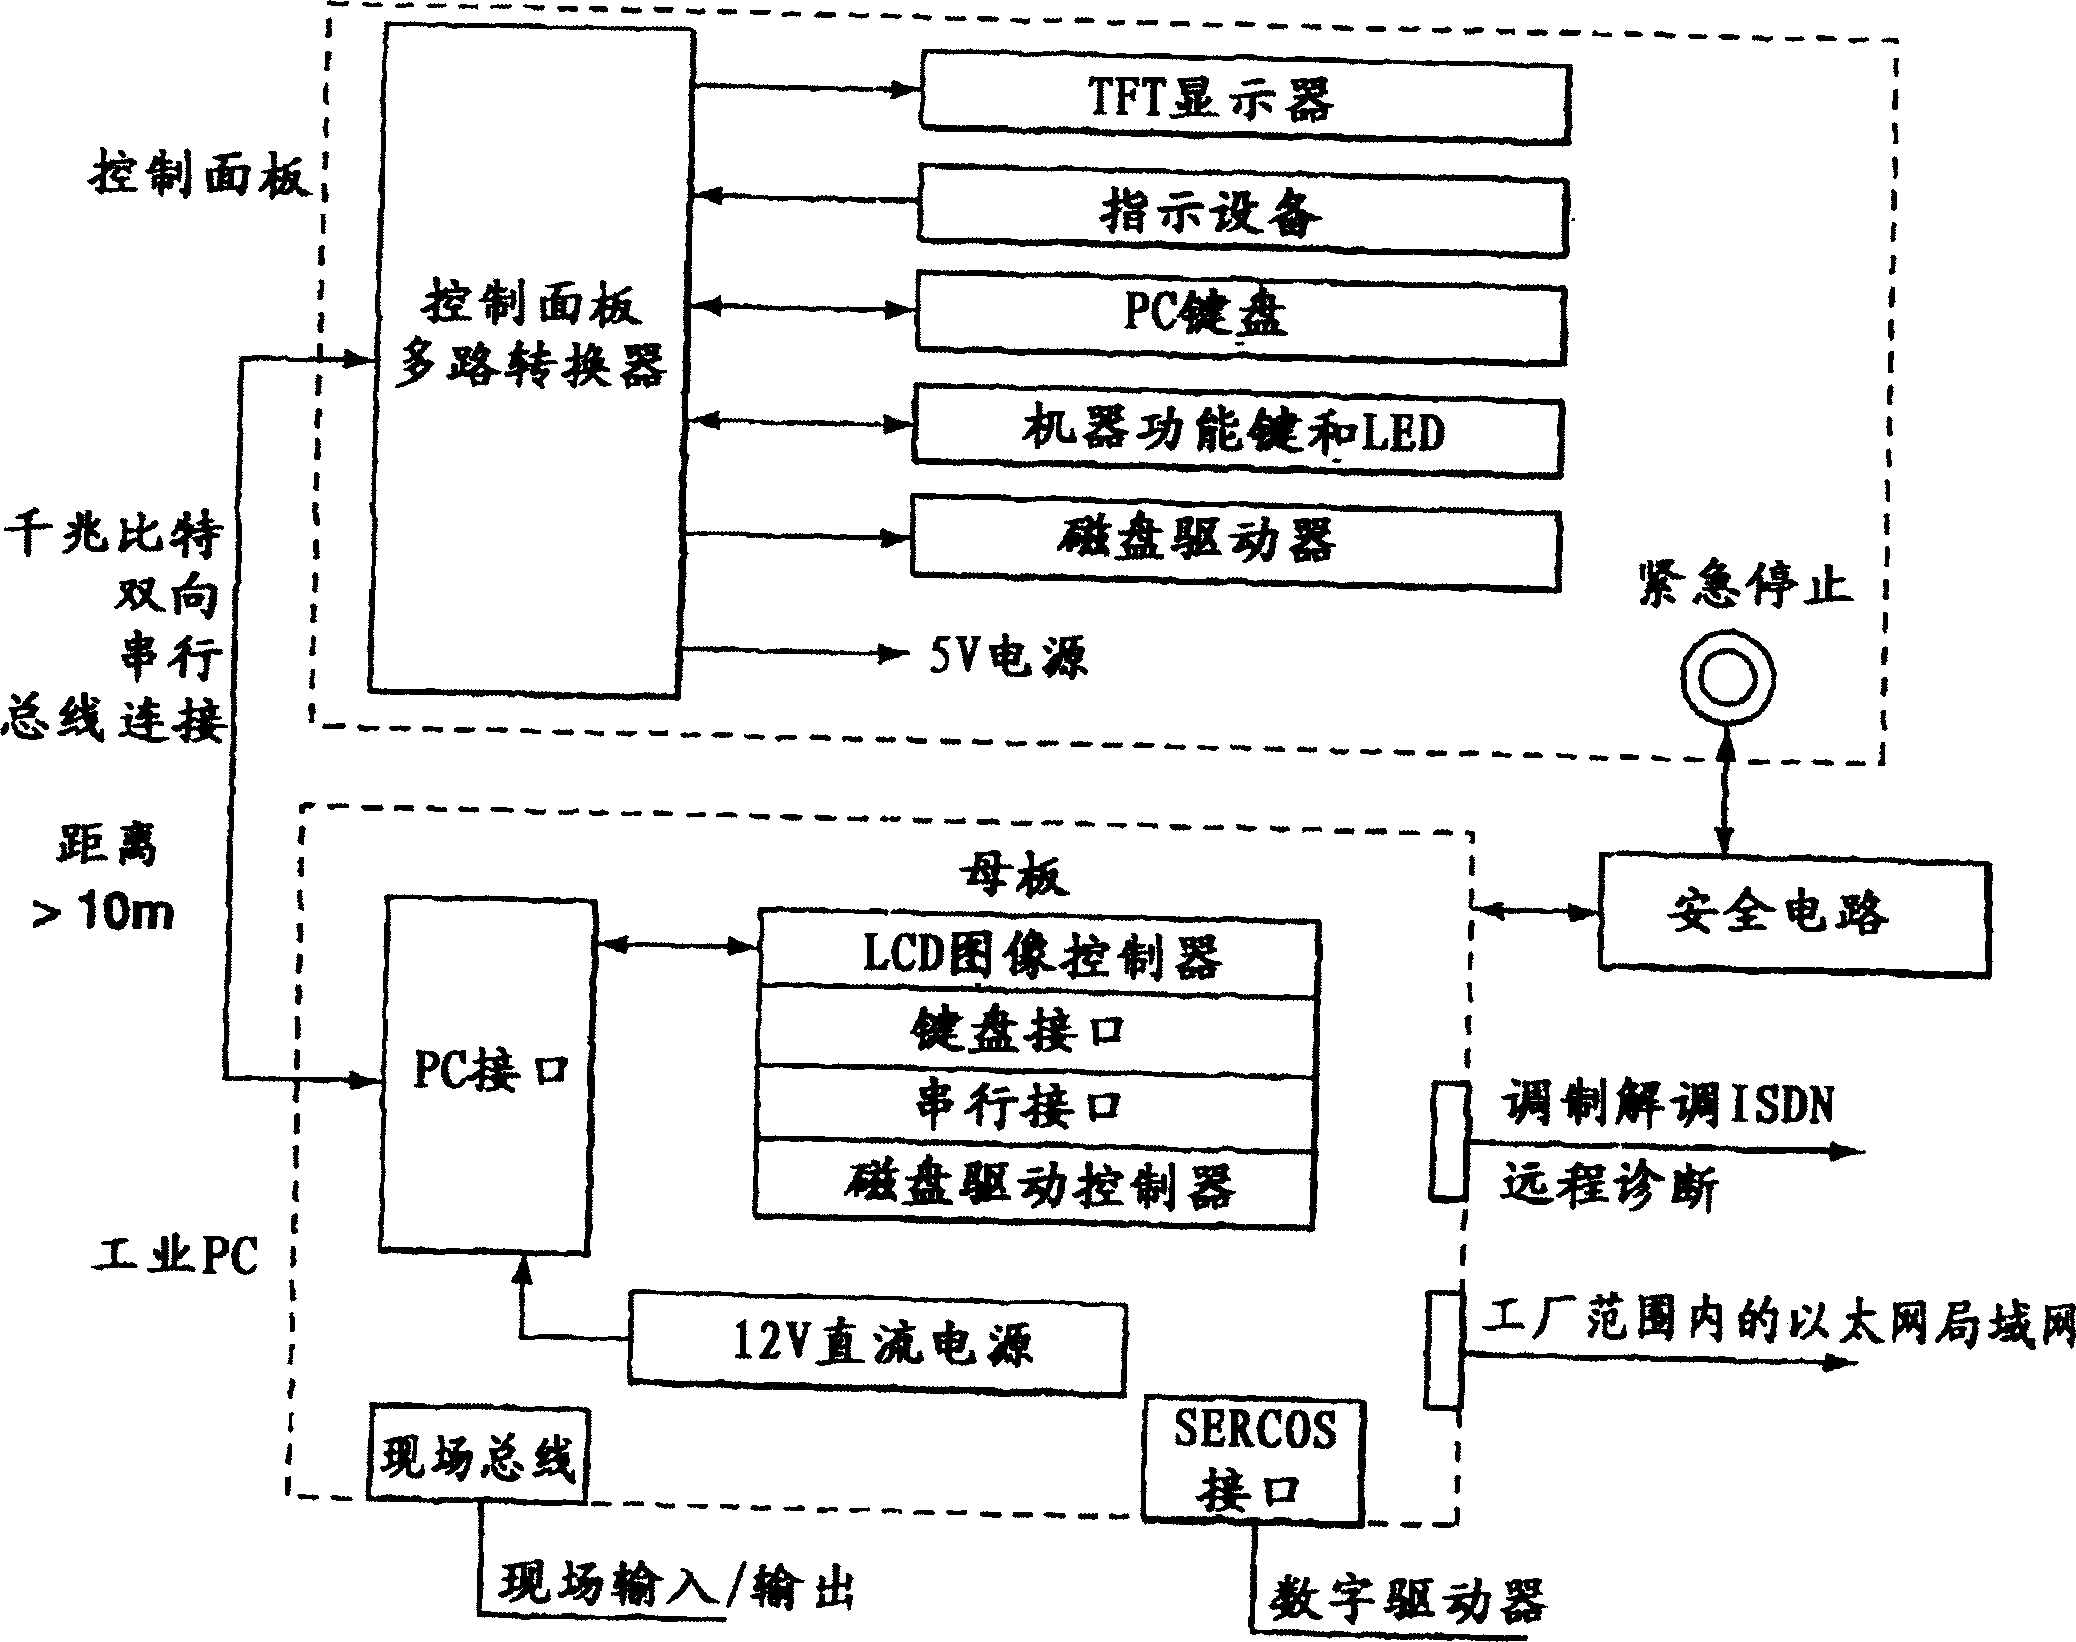 Method of simplifying machine operation